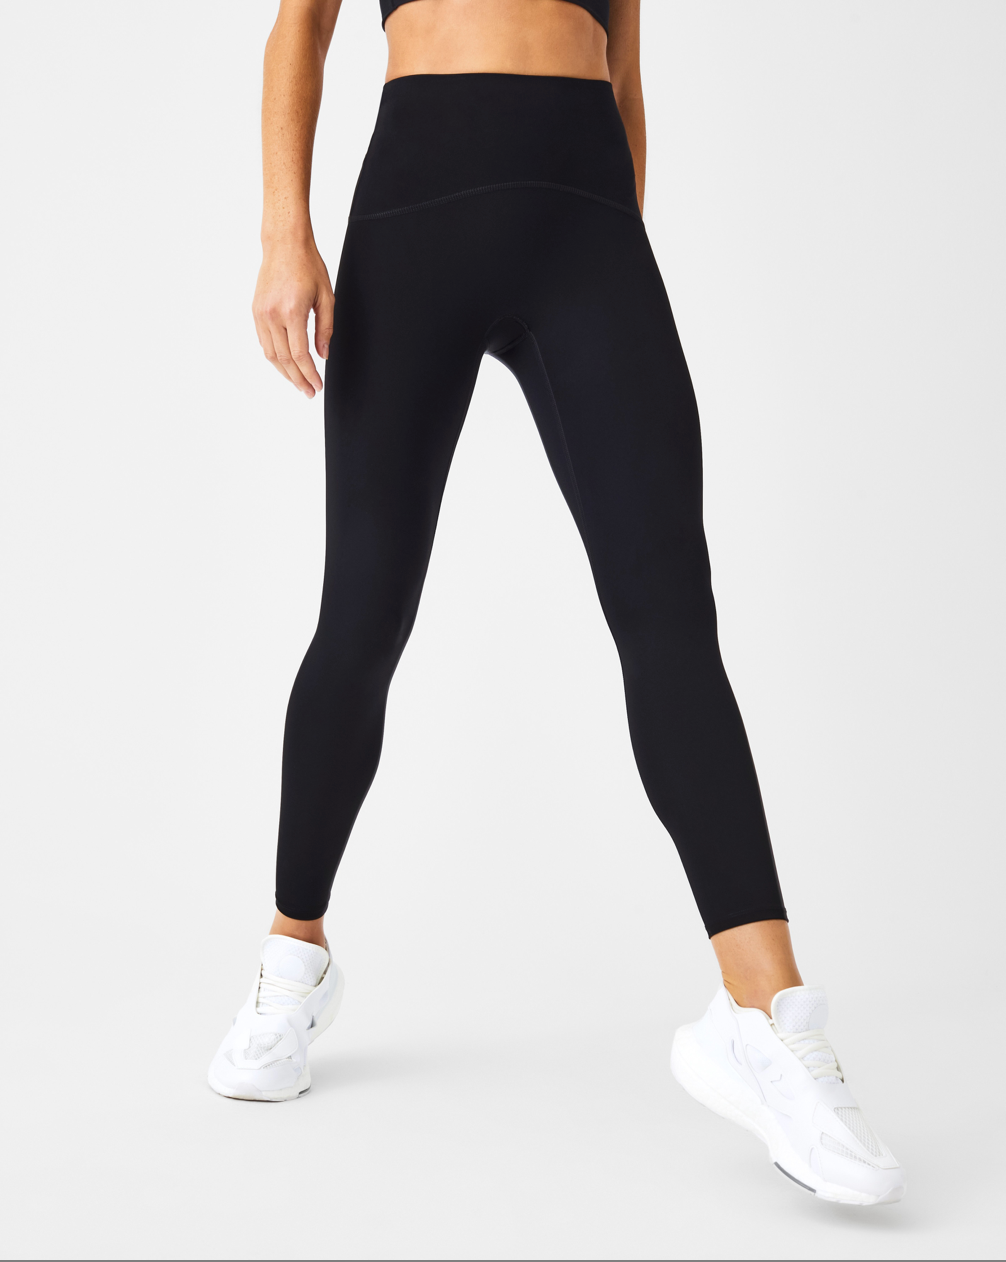 booty boost® active 7/8 leggings — Wooden Nickel